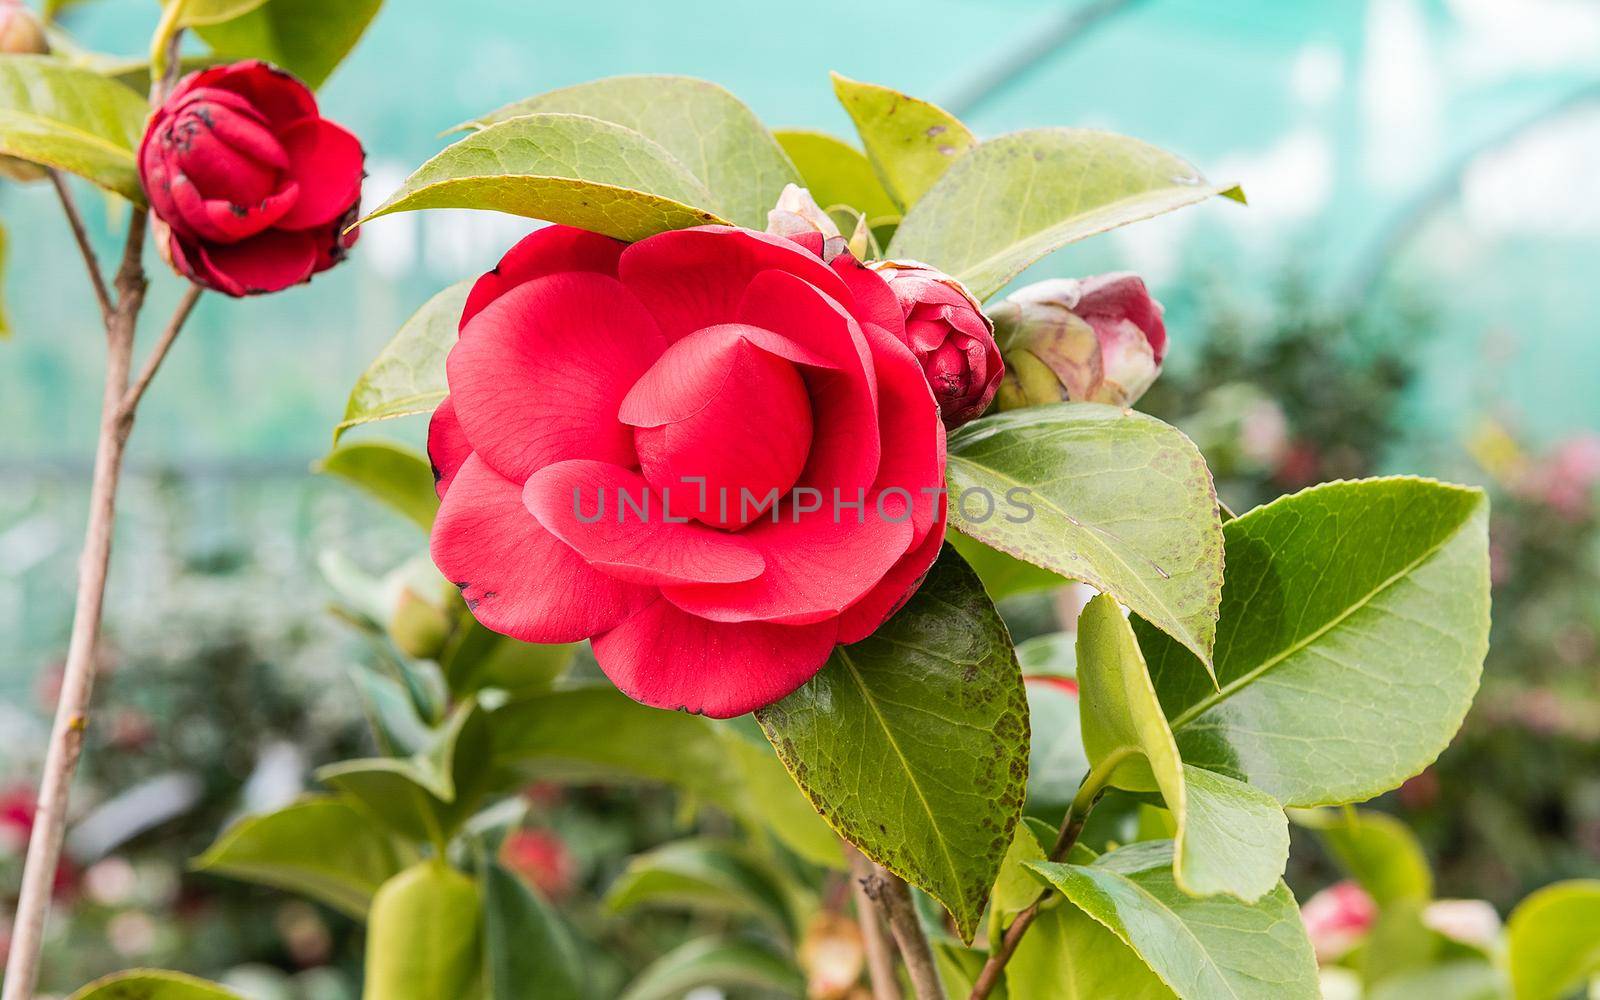 Beautiful red camellia flowers inside a greenhouse by marcorubino